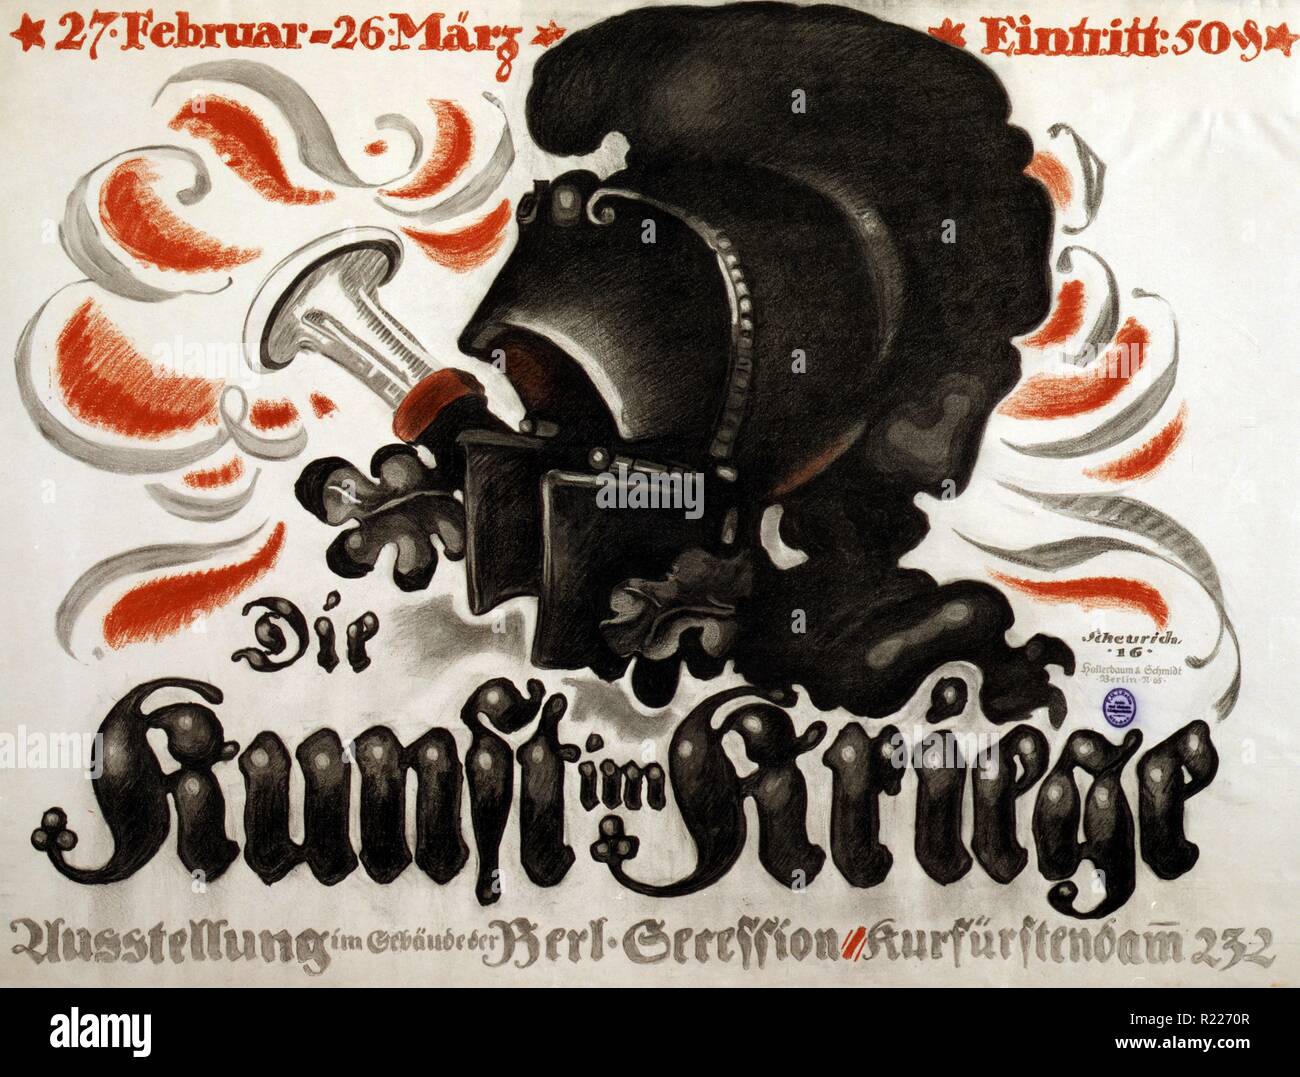 Die Kunst im Krieg / Scheurich, '16. by paul Scheurich, Paul, 1883-1945, artist. 1916 Poster shows a large Roman helmet. Text announces an exhibition 'Art in War' in Berlin. Stock Photo